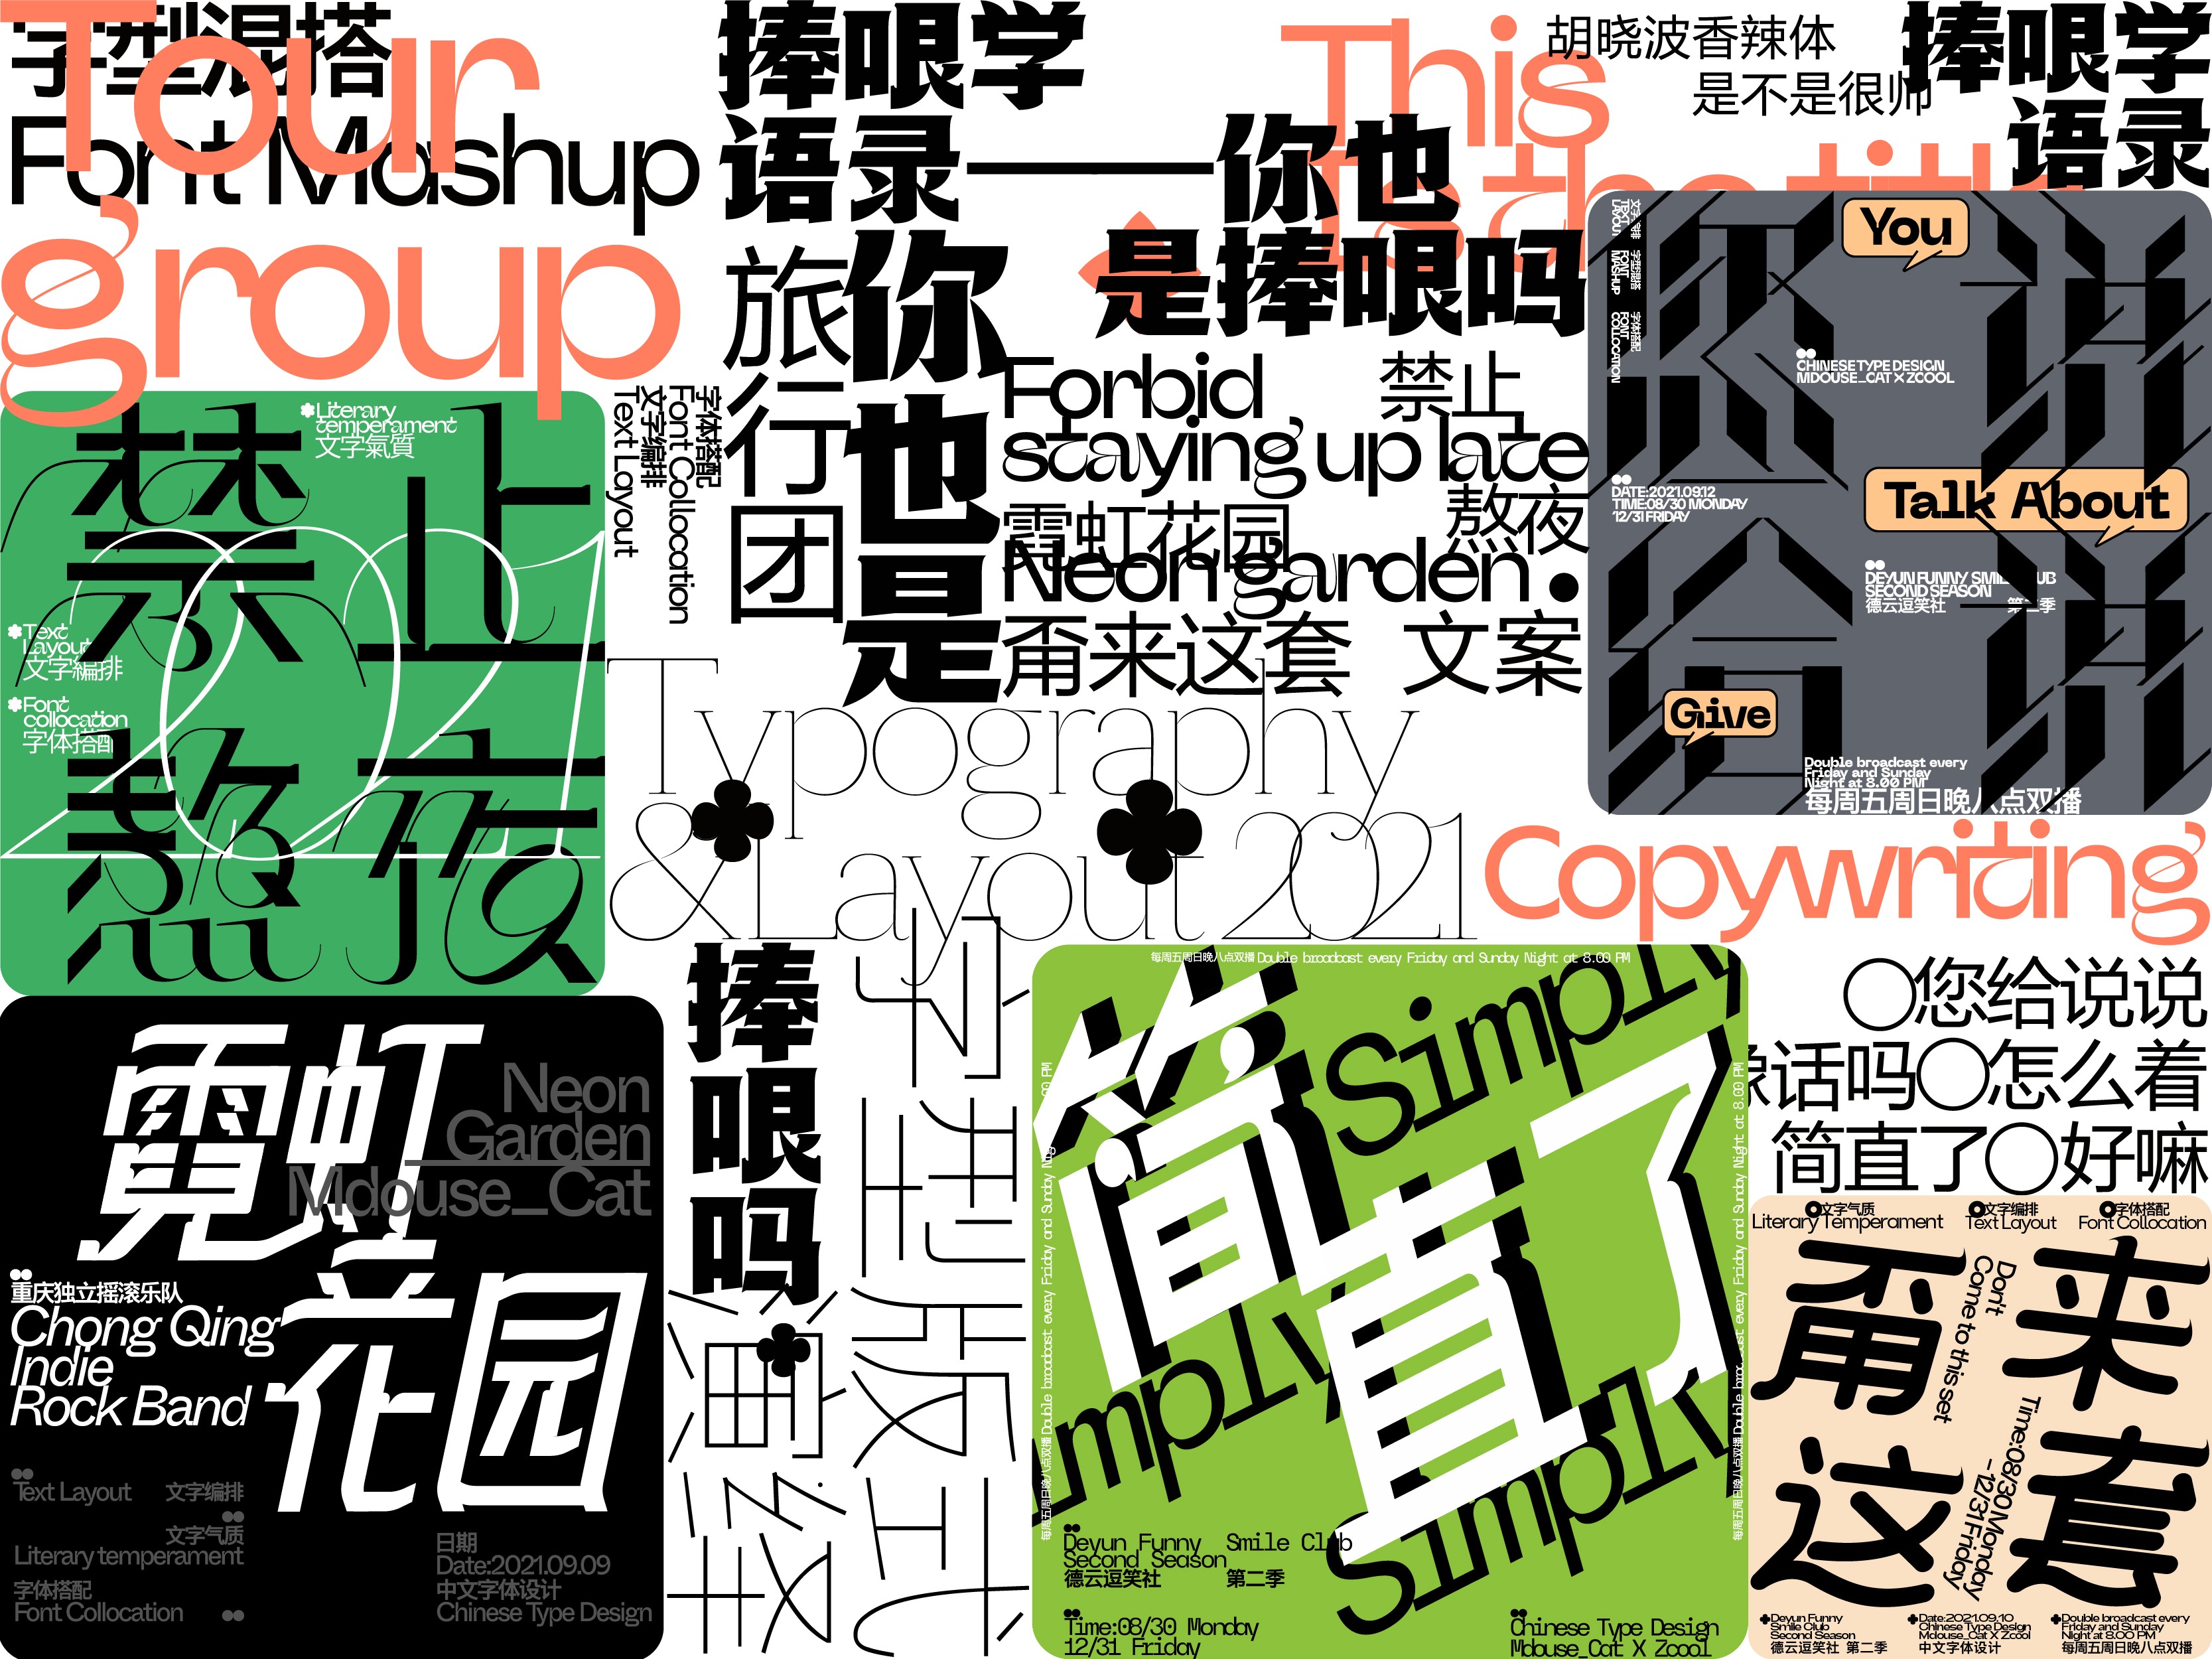 Typography.Vol.3 X 德云斗笑社 X Mdouse_Cat